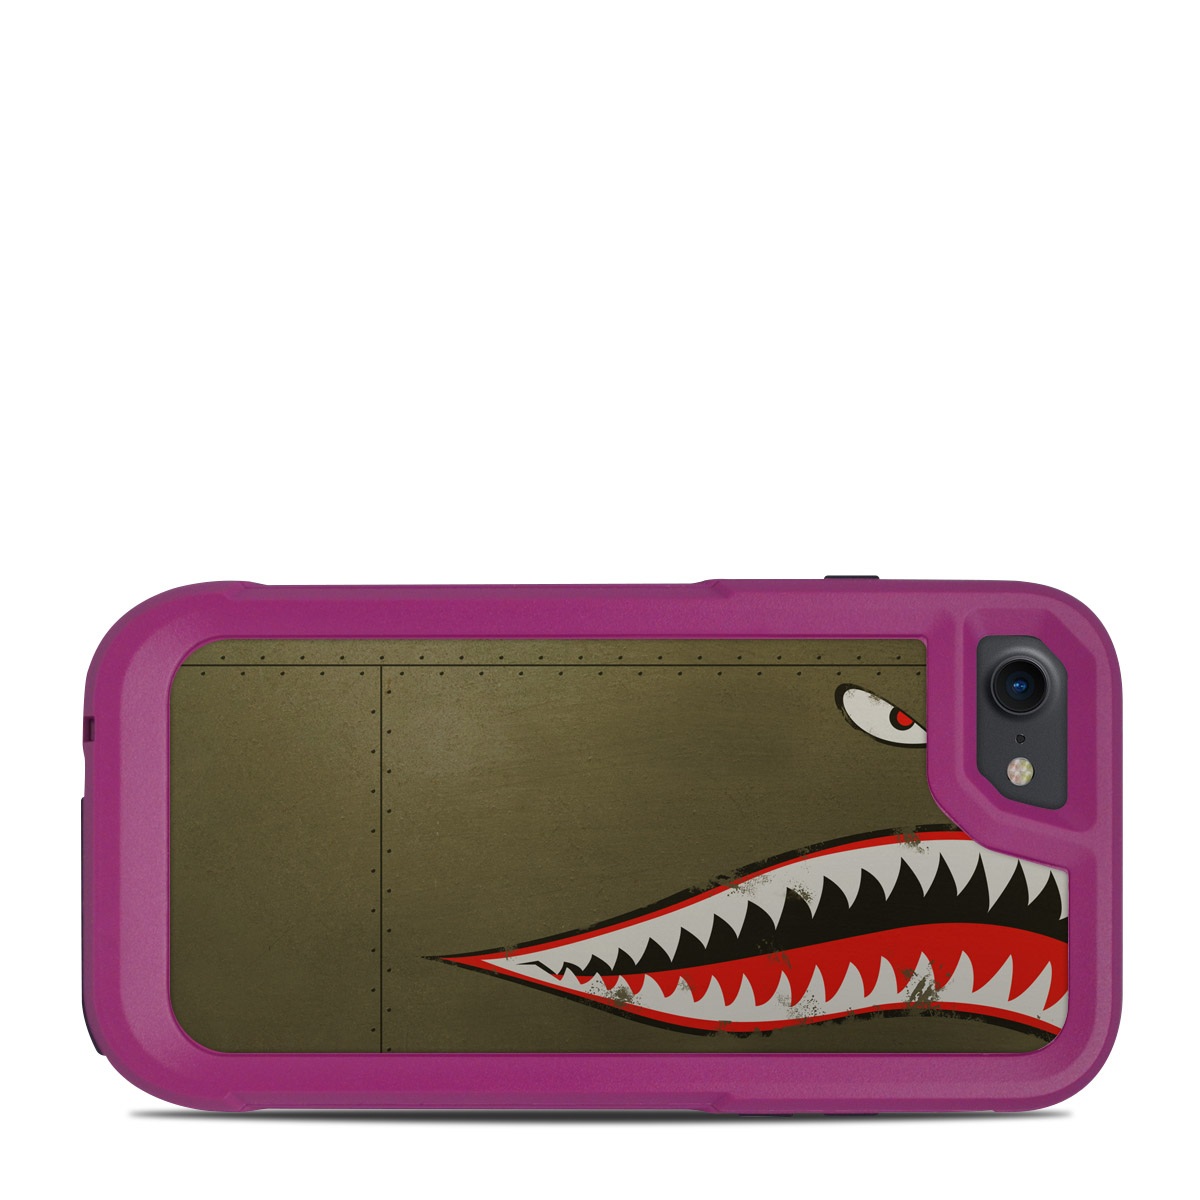 OtterBox Pursuit iPhone 7-8 Case Skin - USAF Shark (Image 1)